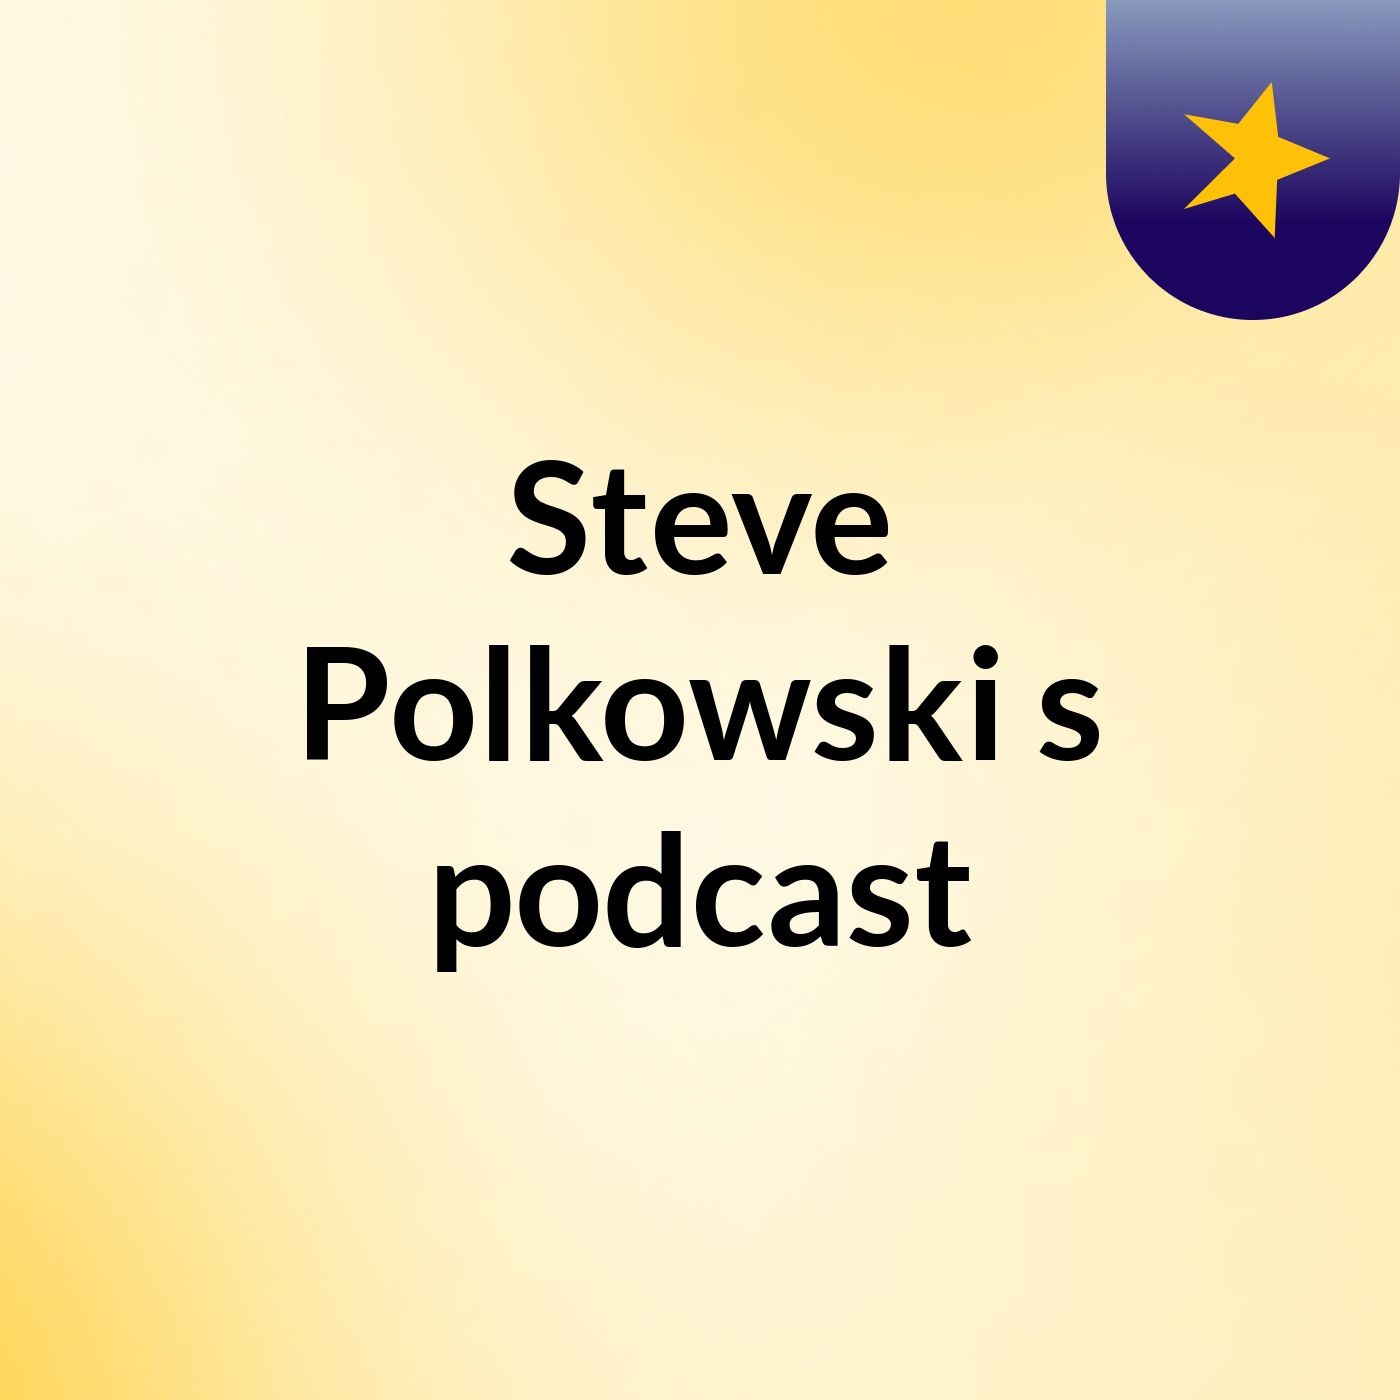 Steve Polkowski's podcast